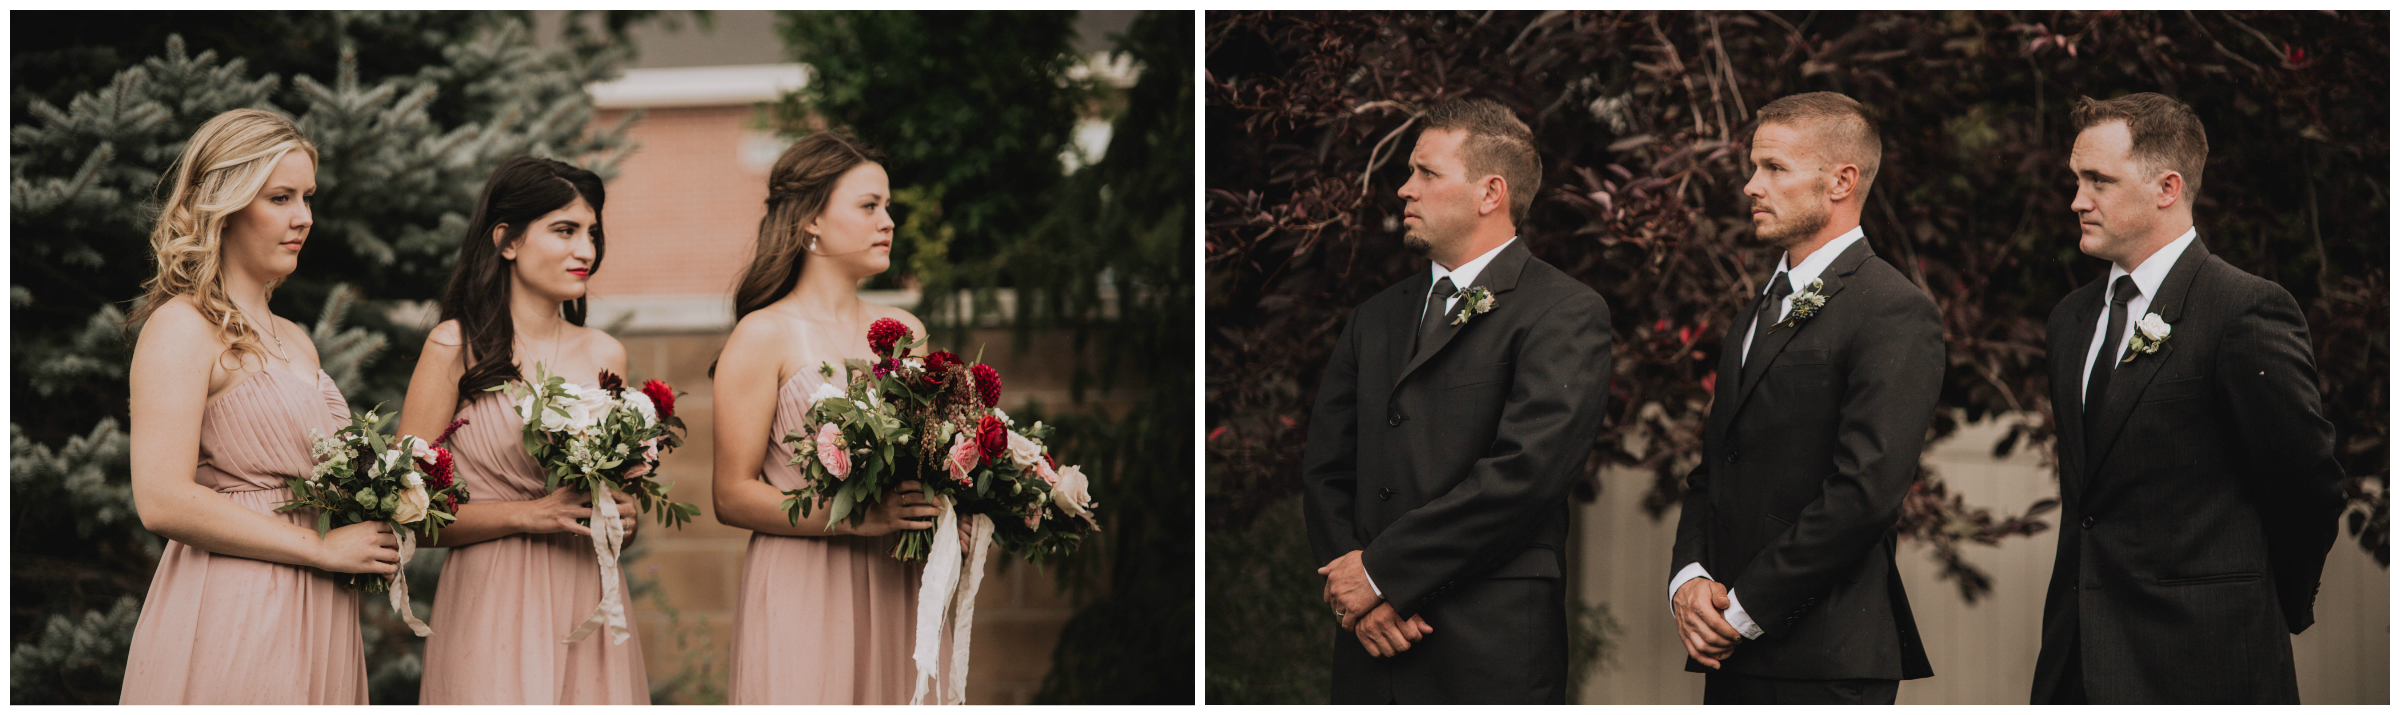 Utah Photographer, Utah Wedding Photographer, Backyard Wedding, Megan and Kevin Buchanan 8.jpg